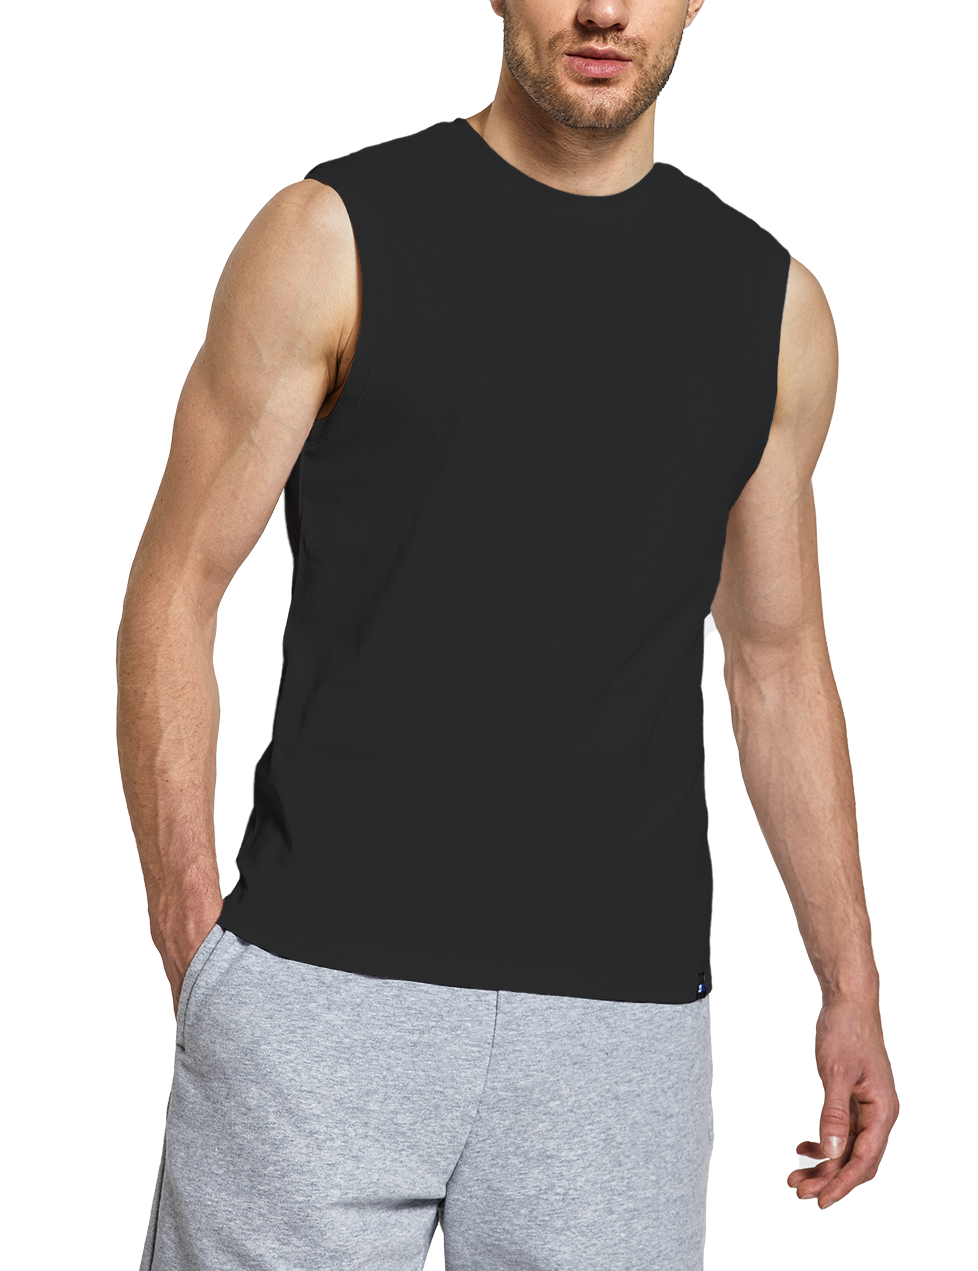 mens sleeveless shirts black